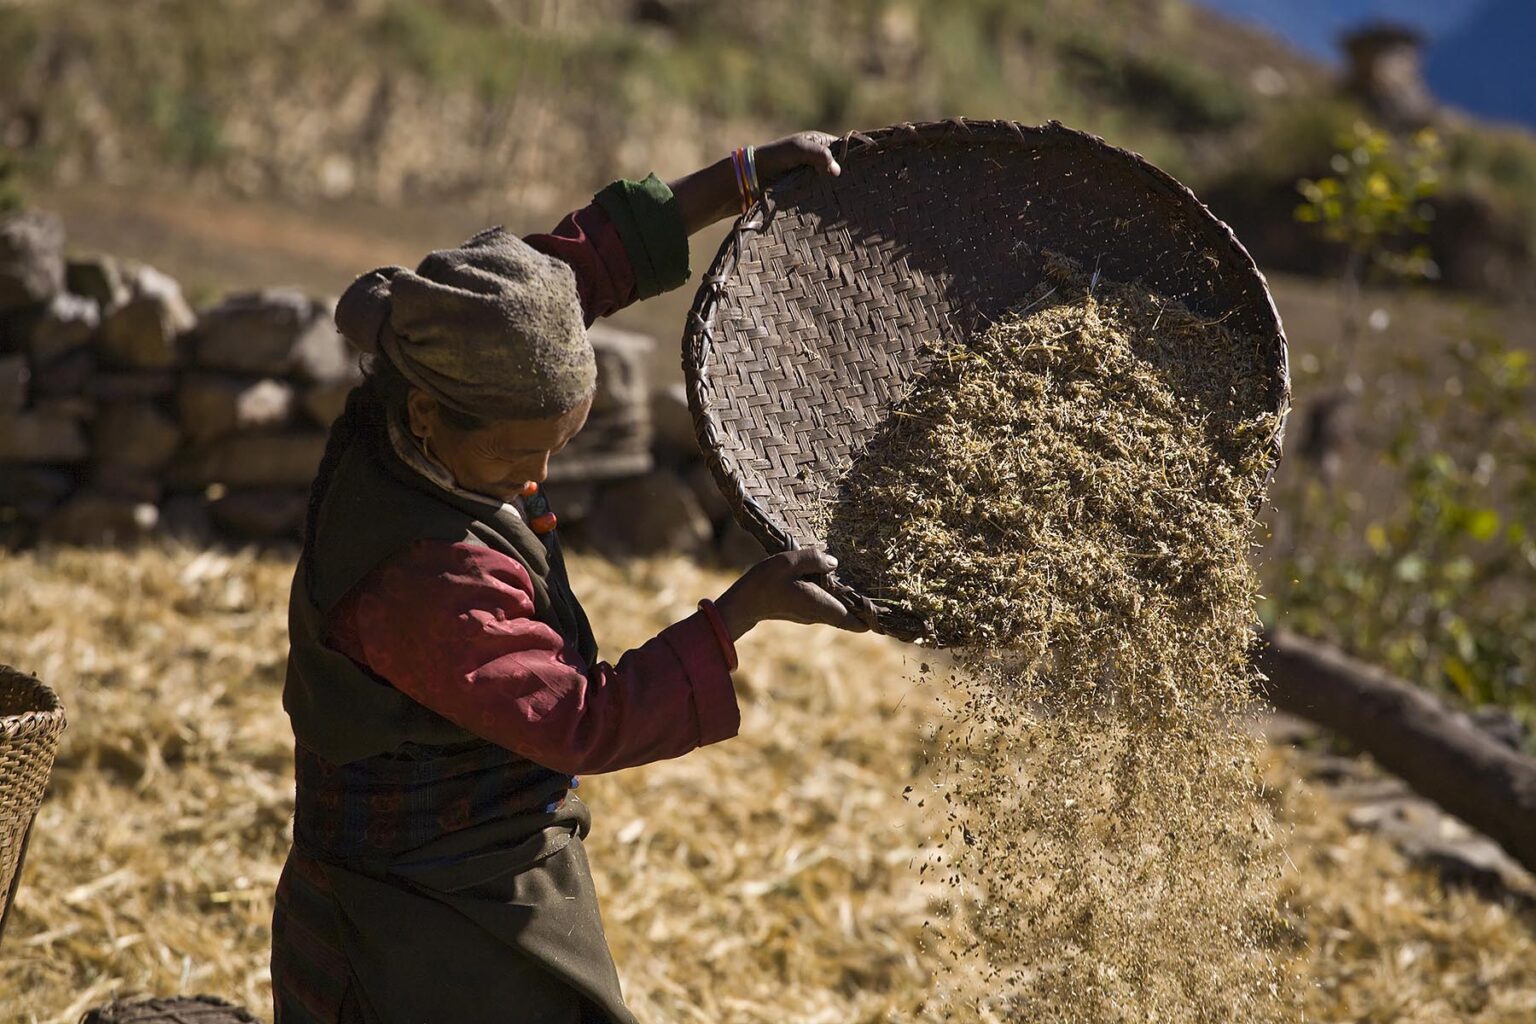 A VILLAGE WOMAN threshing wheat in the village of CHHAK - AROUND MANASLU TREK, NEPAL